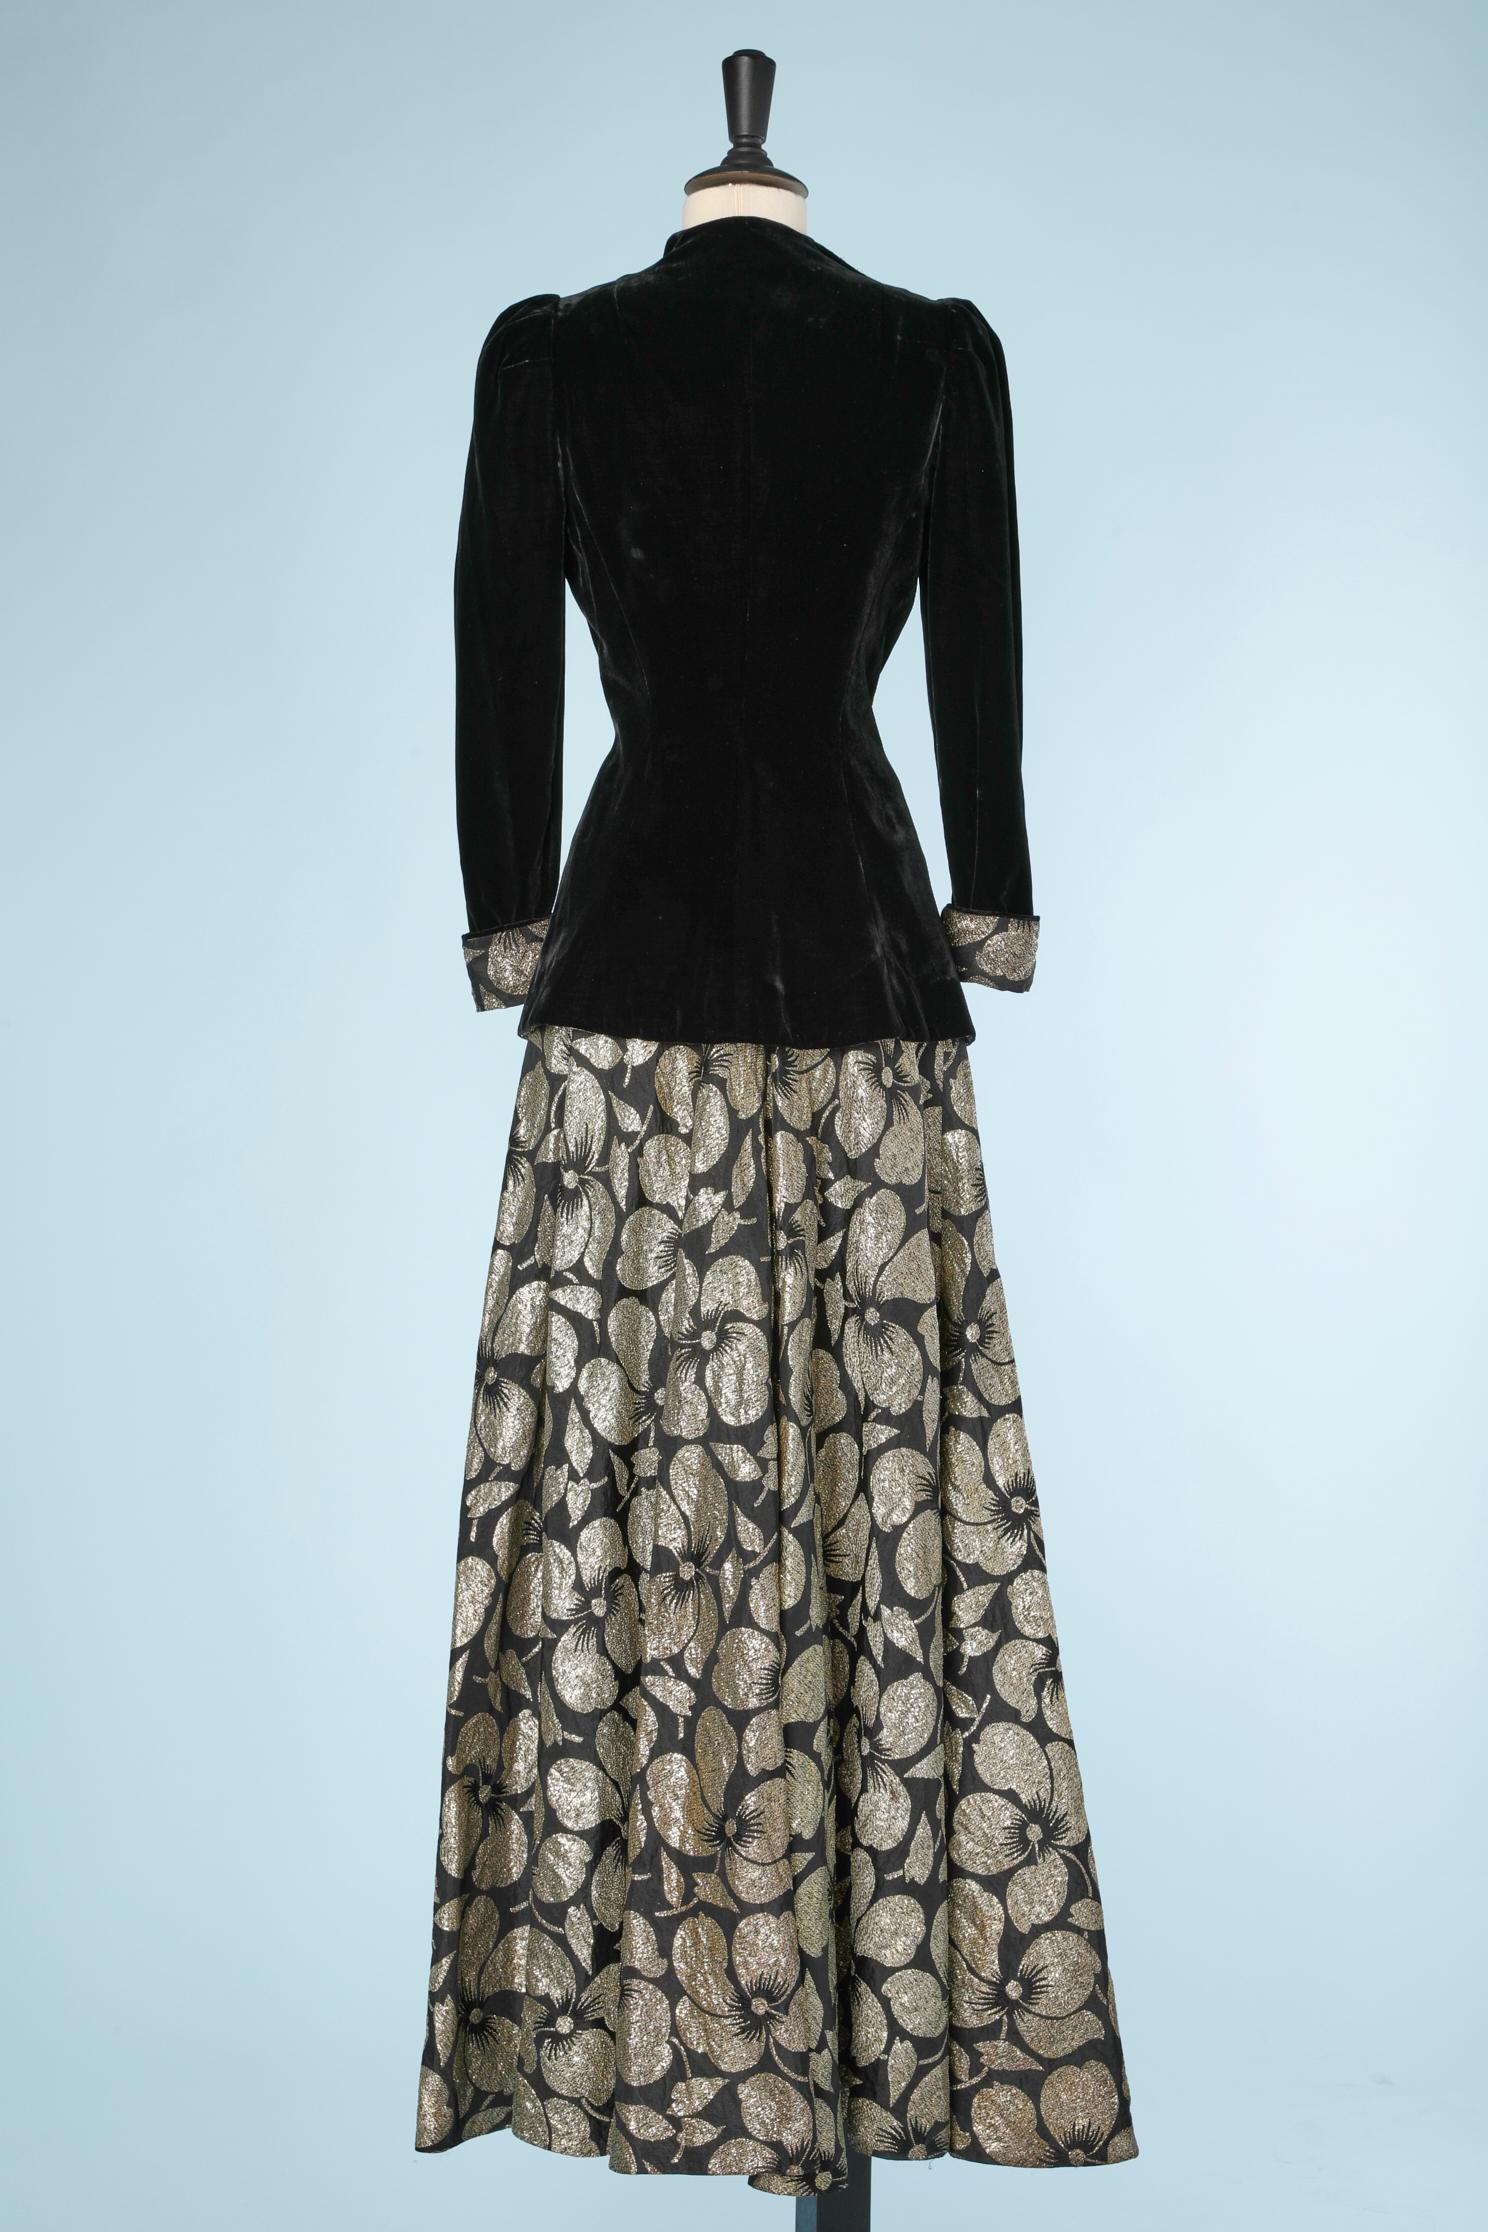 Women's Evening long skirt-suit in black velvet and gold lurex brocade dress For Sale